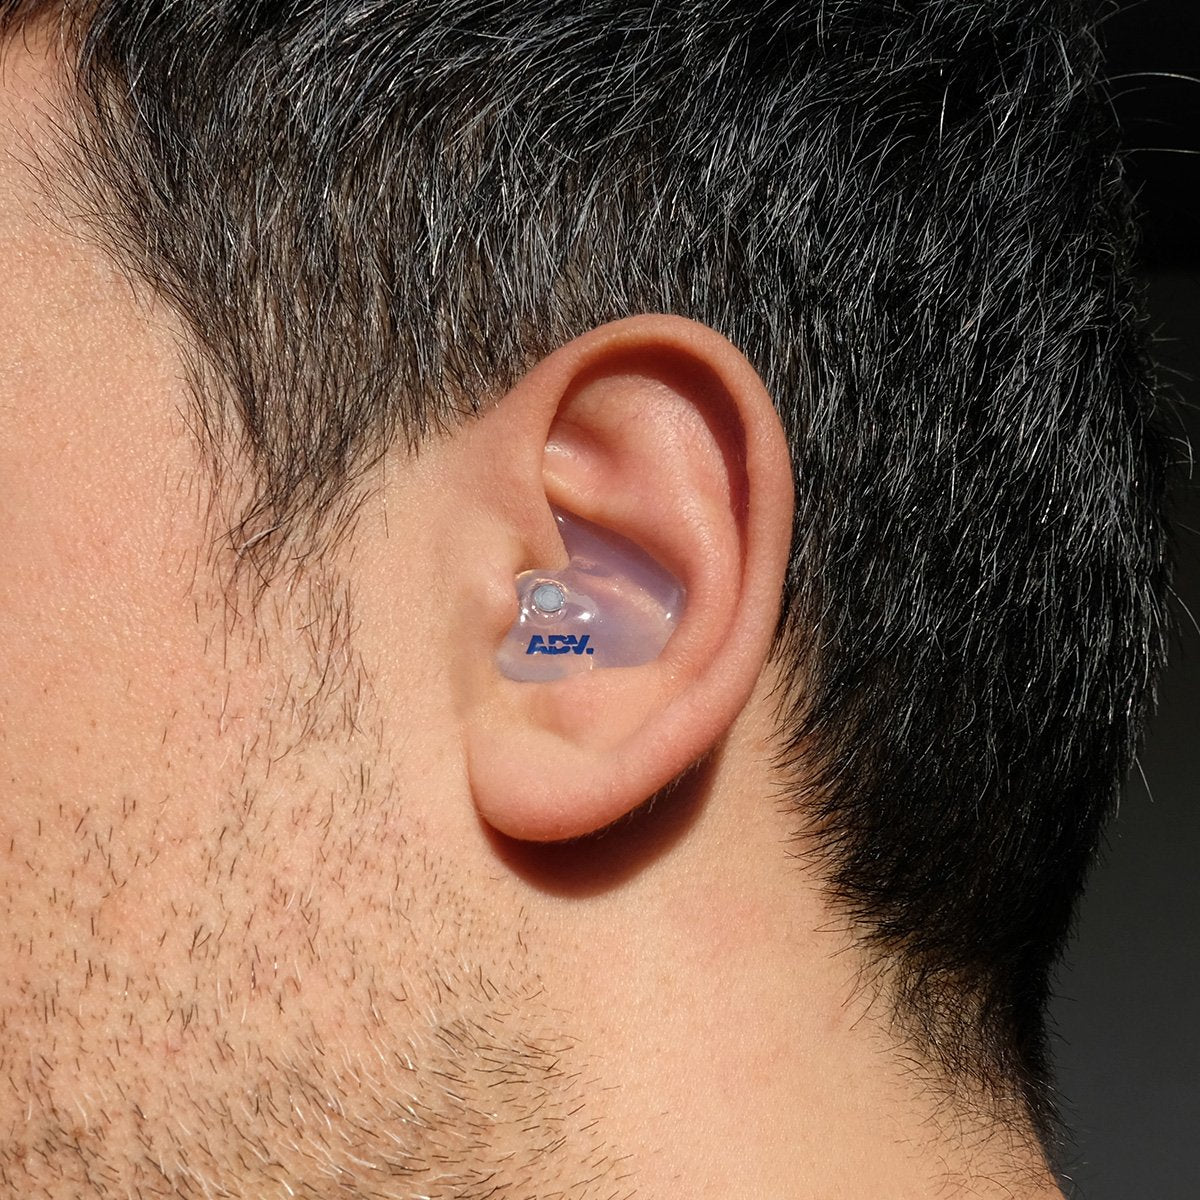 E.A.R. Earplug Pouch - EAR Customized Hearing Protection